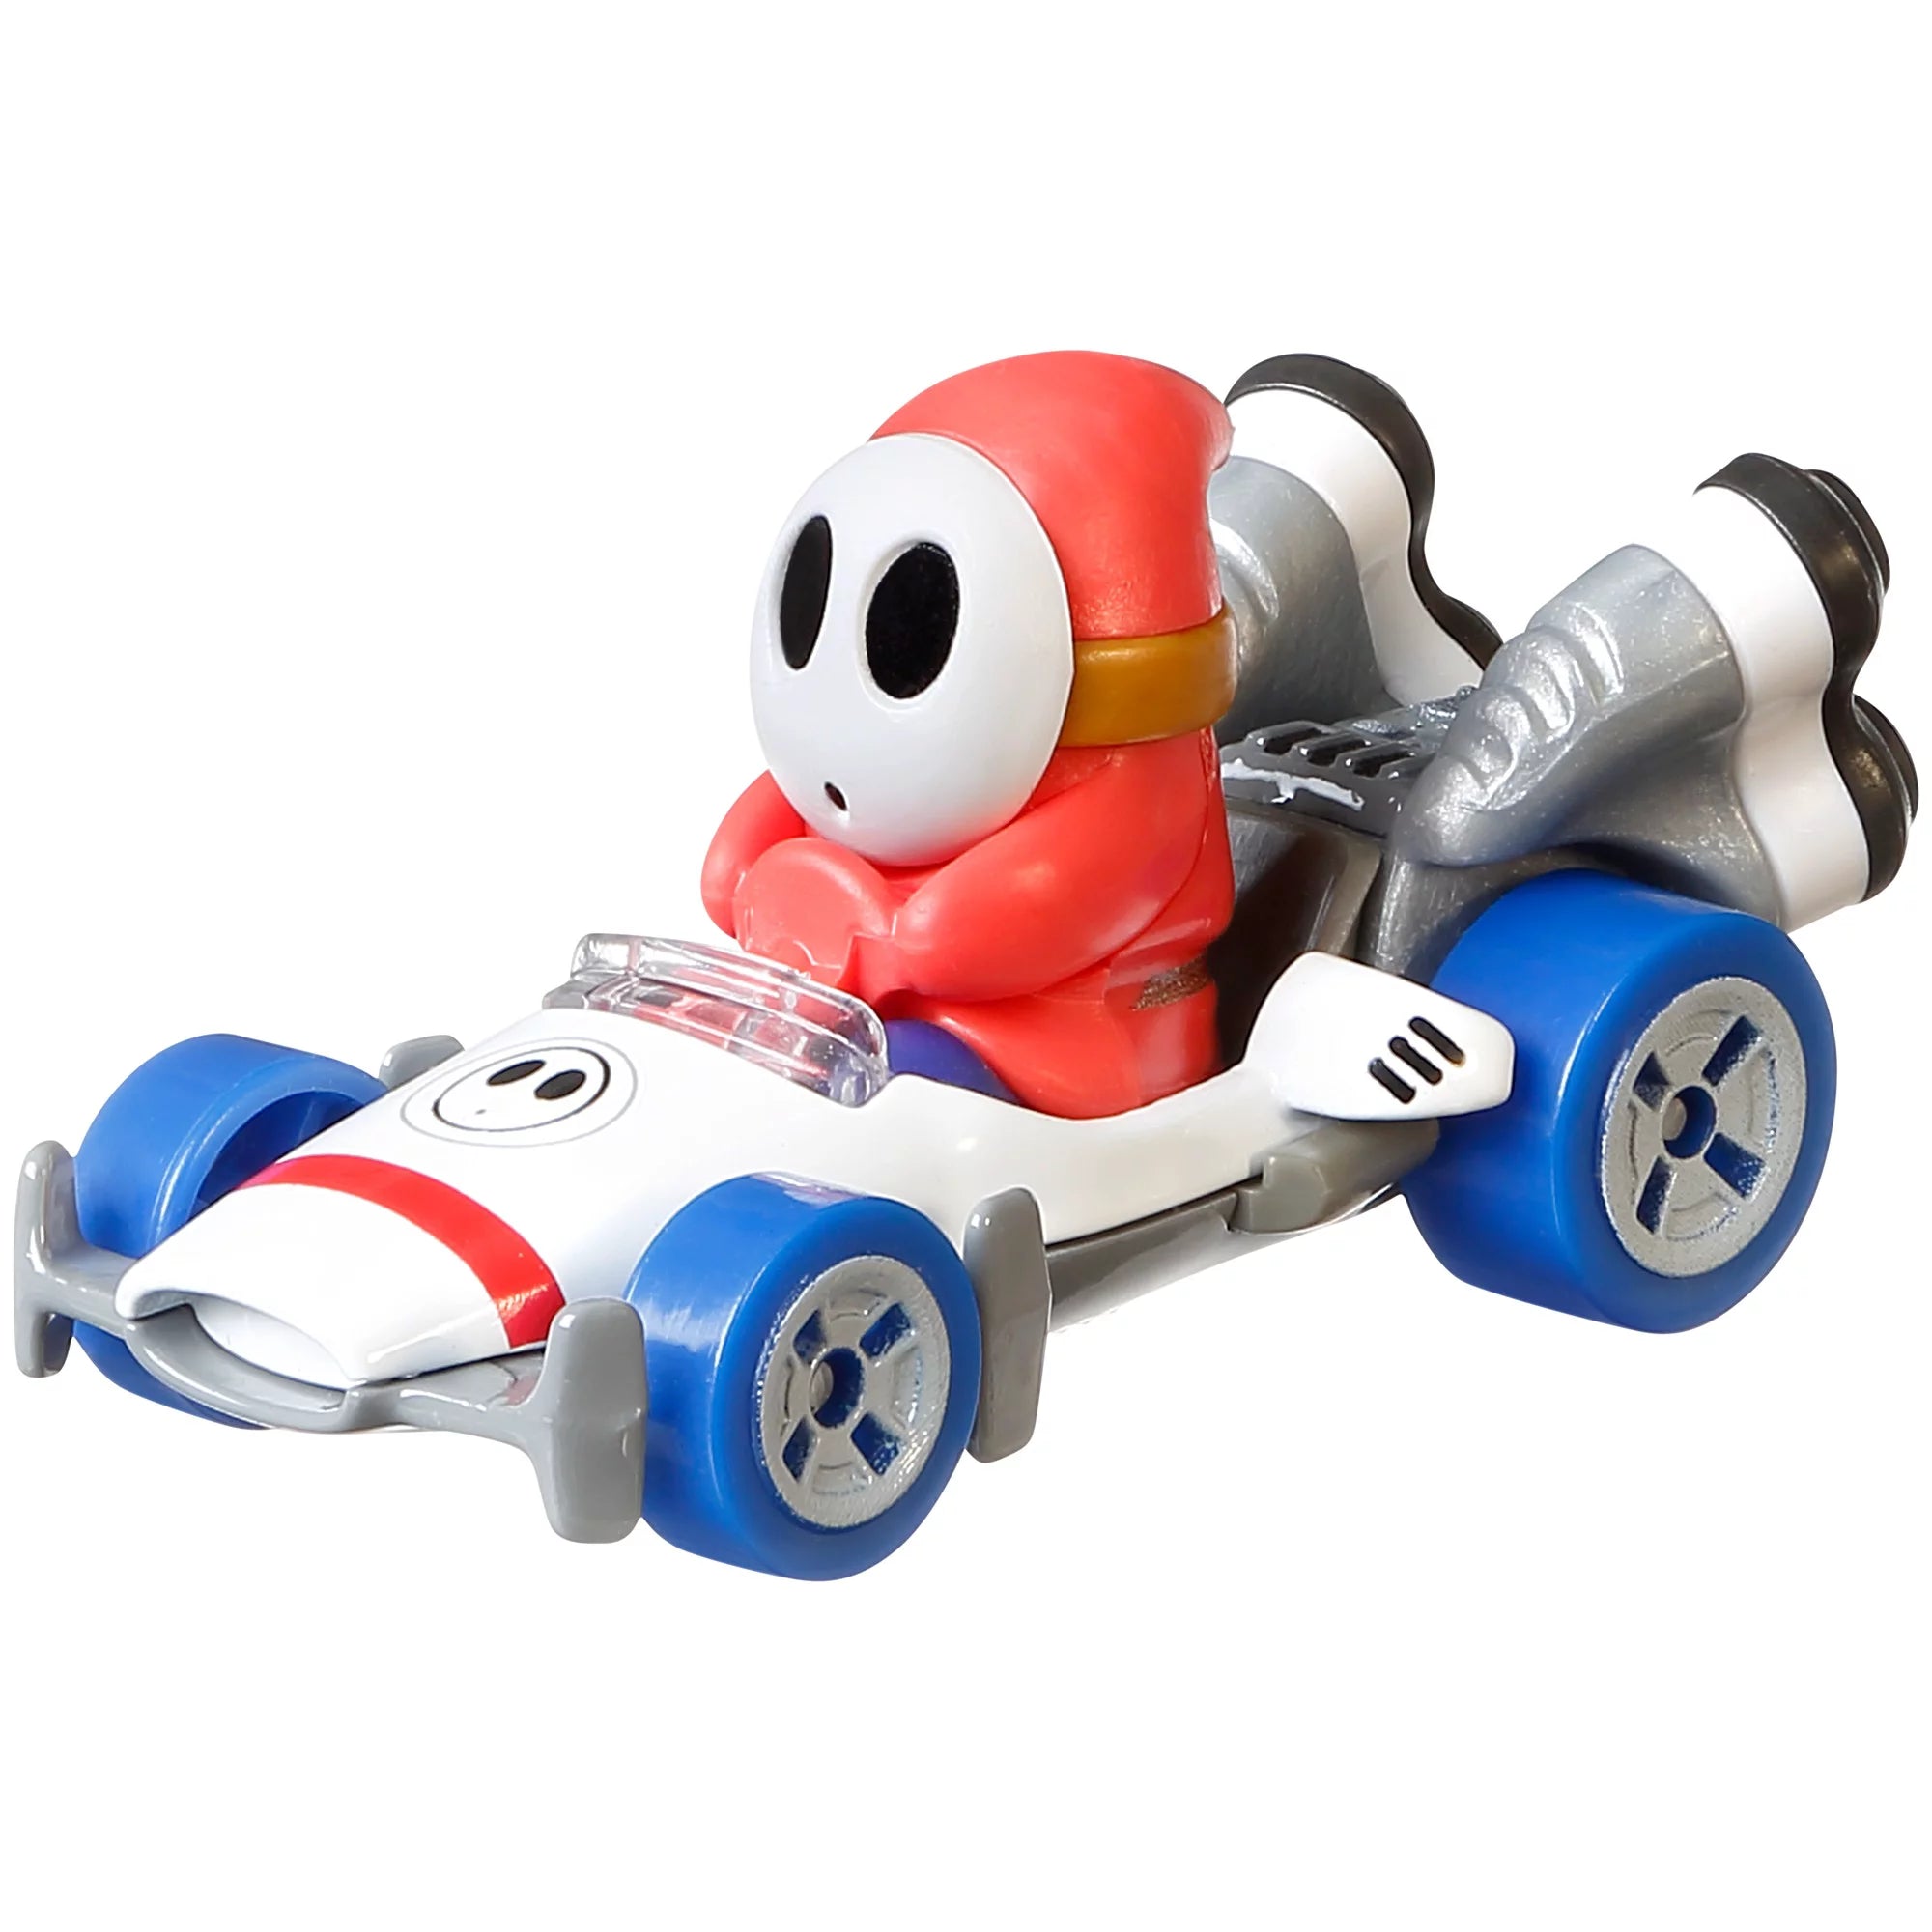 Hot Wheels Mario Kart Cars **Choose Your Kart** 3-2-1 Here We GO! - NEW